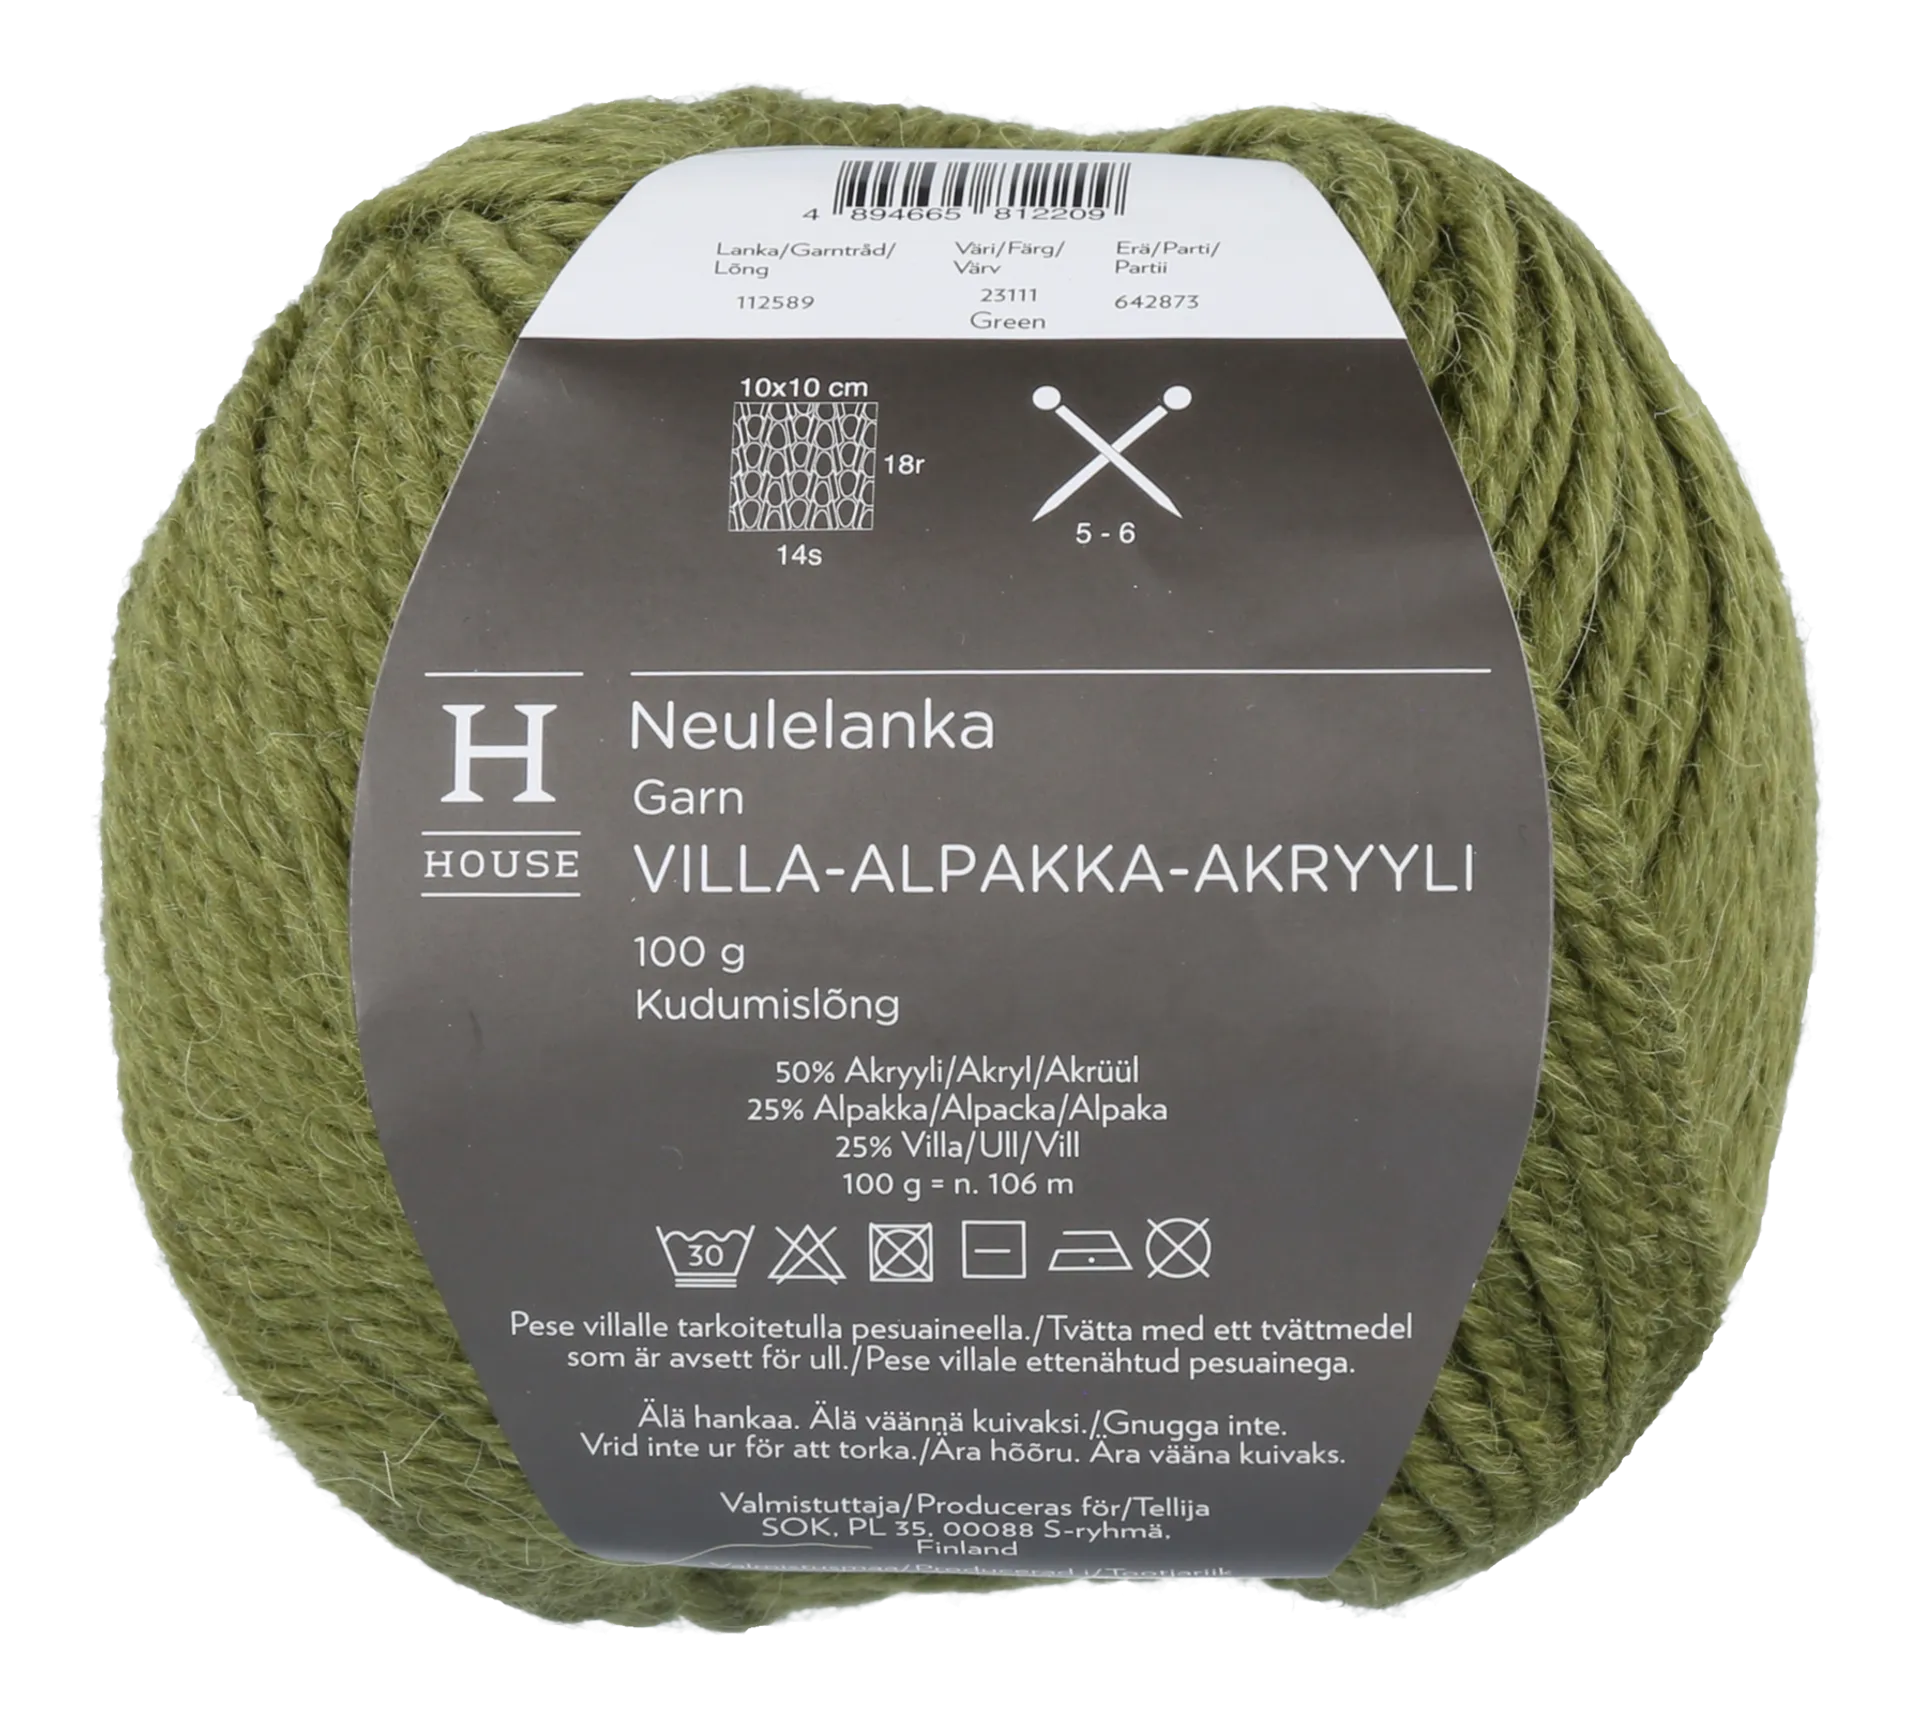 House neulelanka villa-alpakka-akryyli 112589 100 g Green 23111 - 1